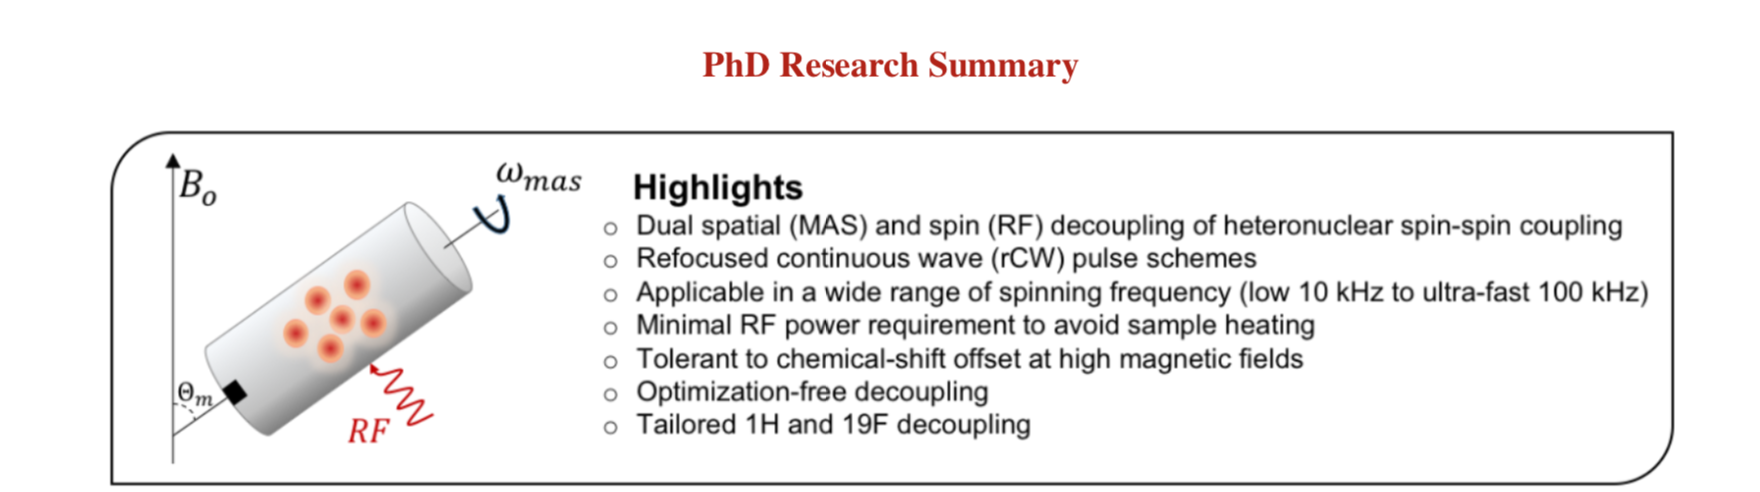 PhD Research Summary